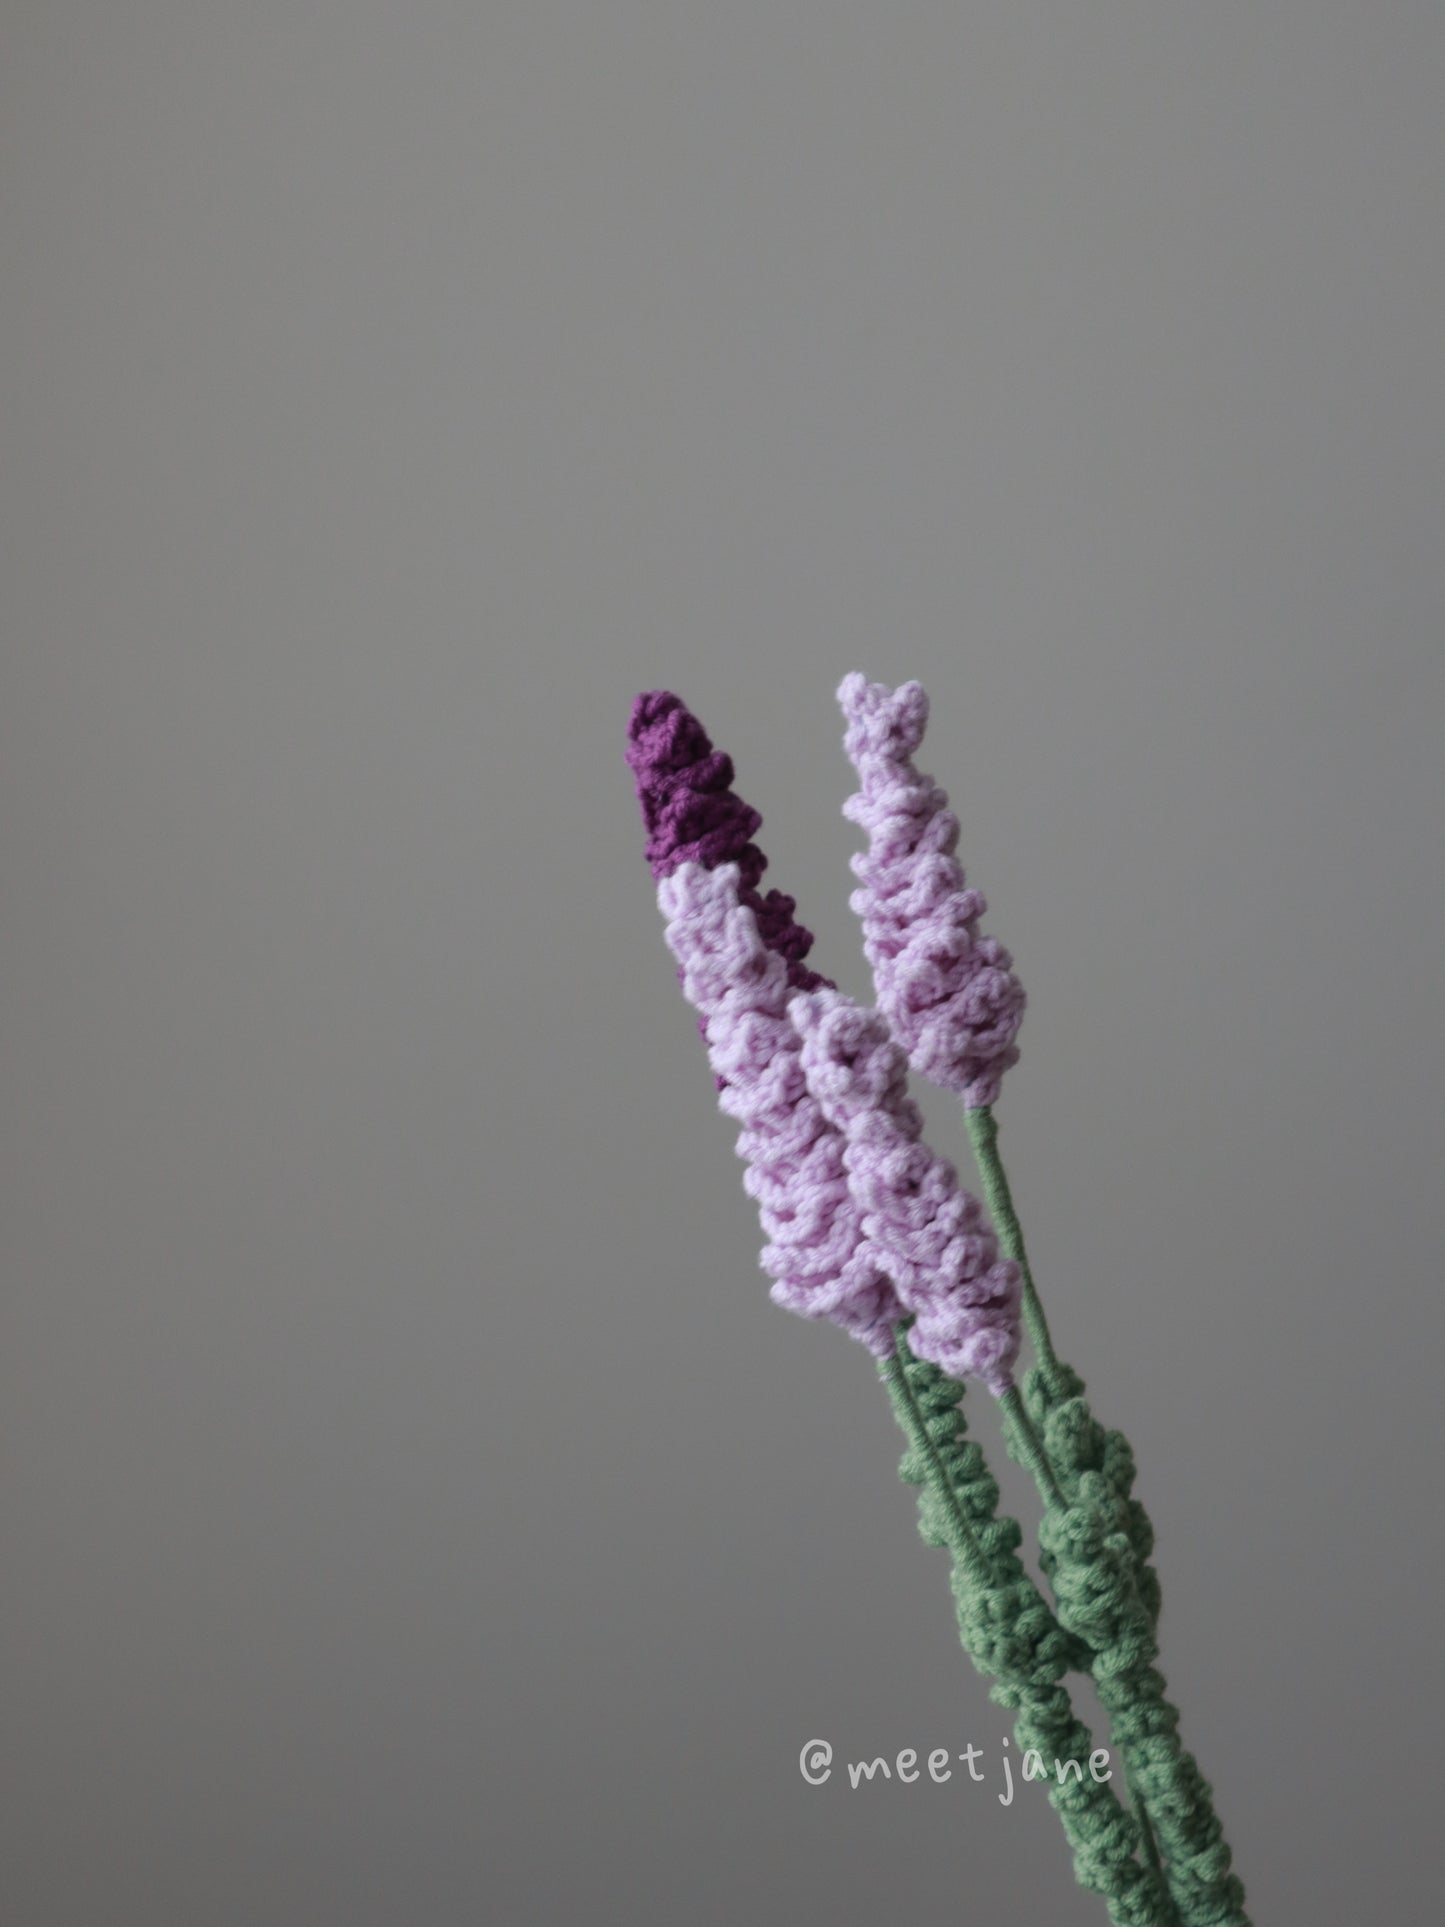 Meetjane bouquet|Melbourne handmade |Lavender